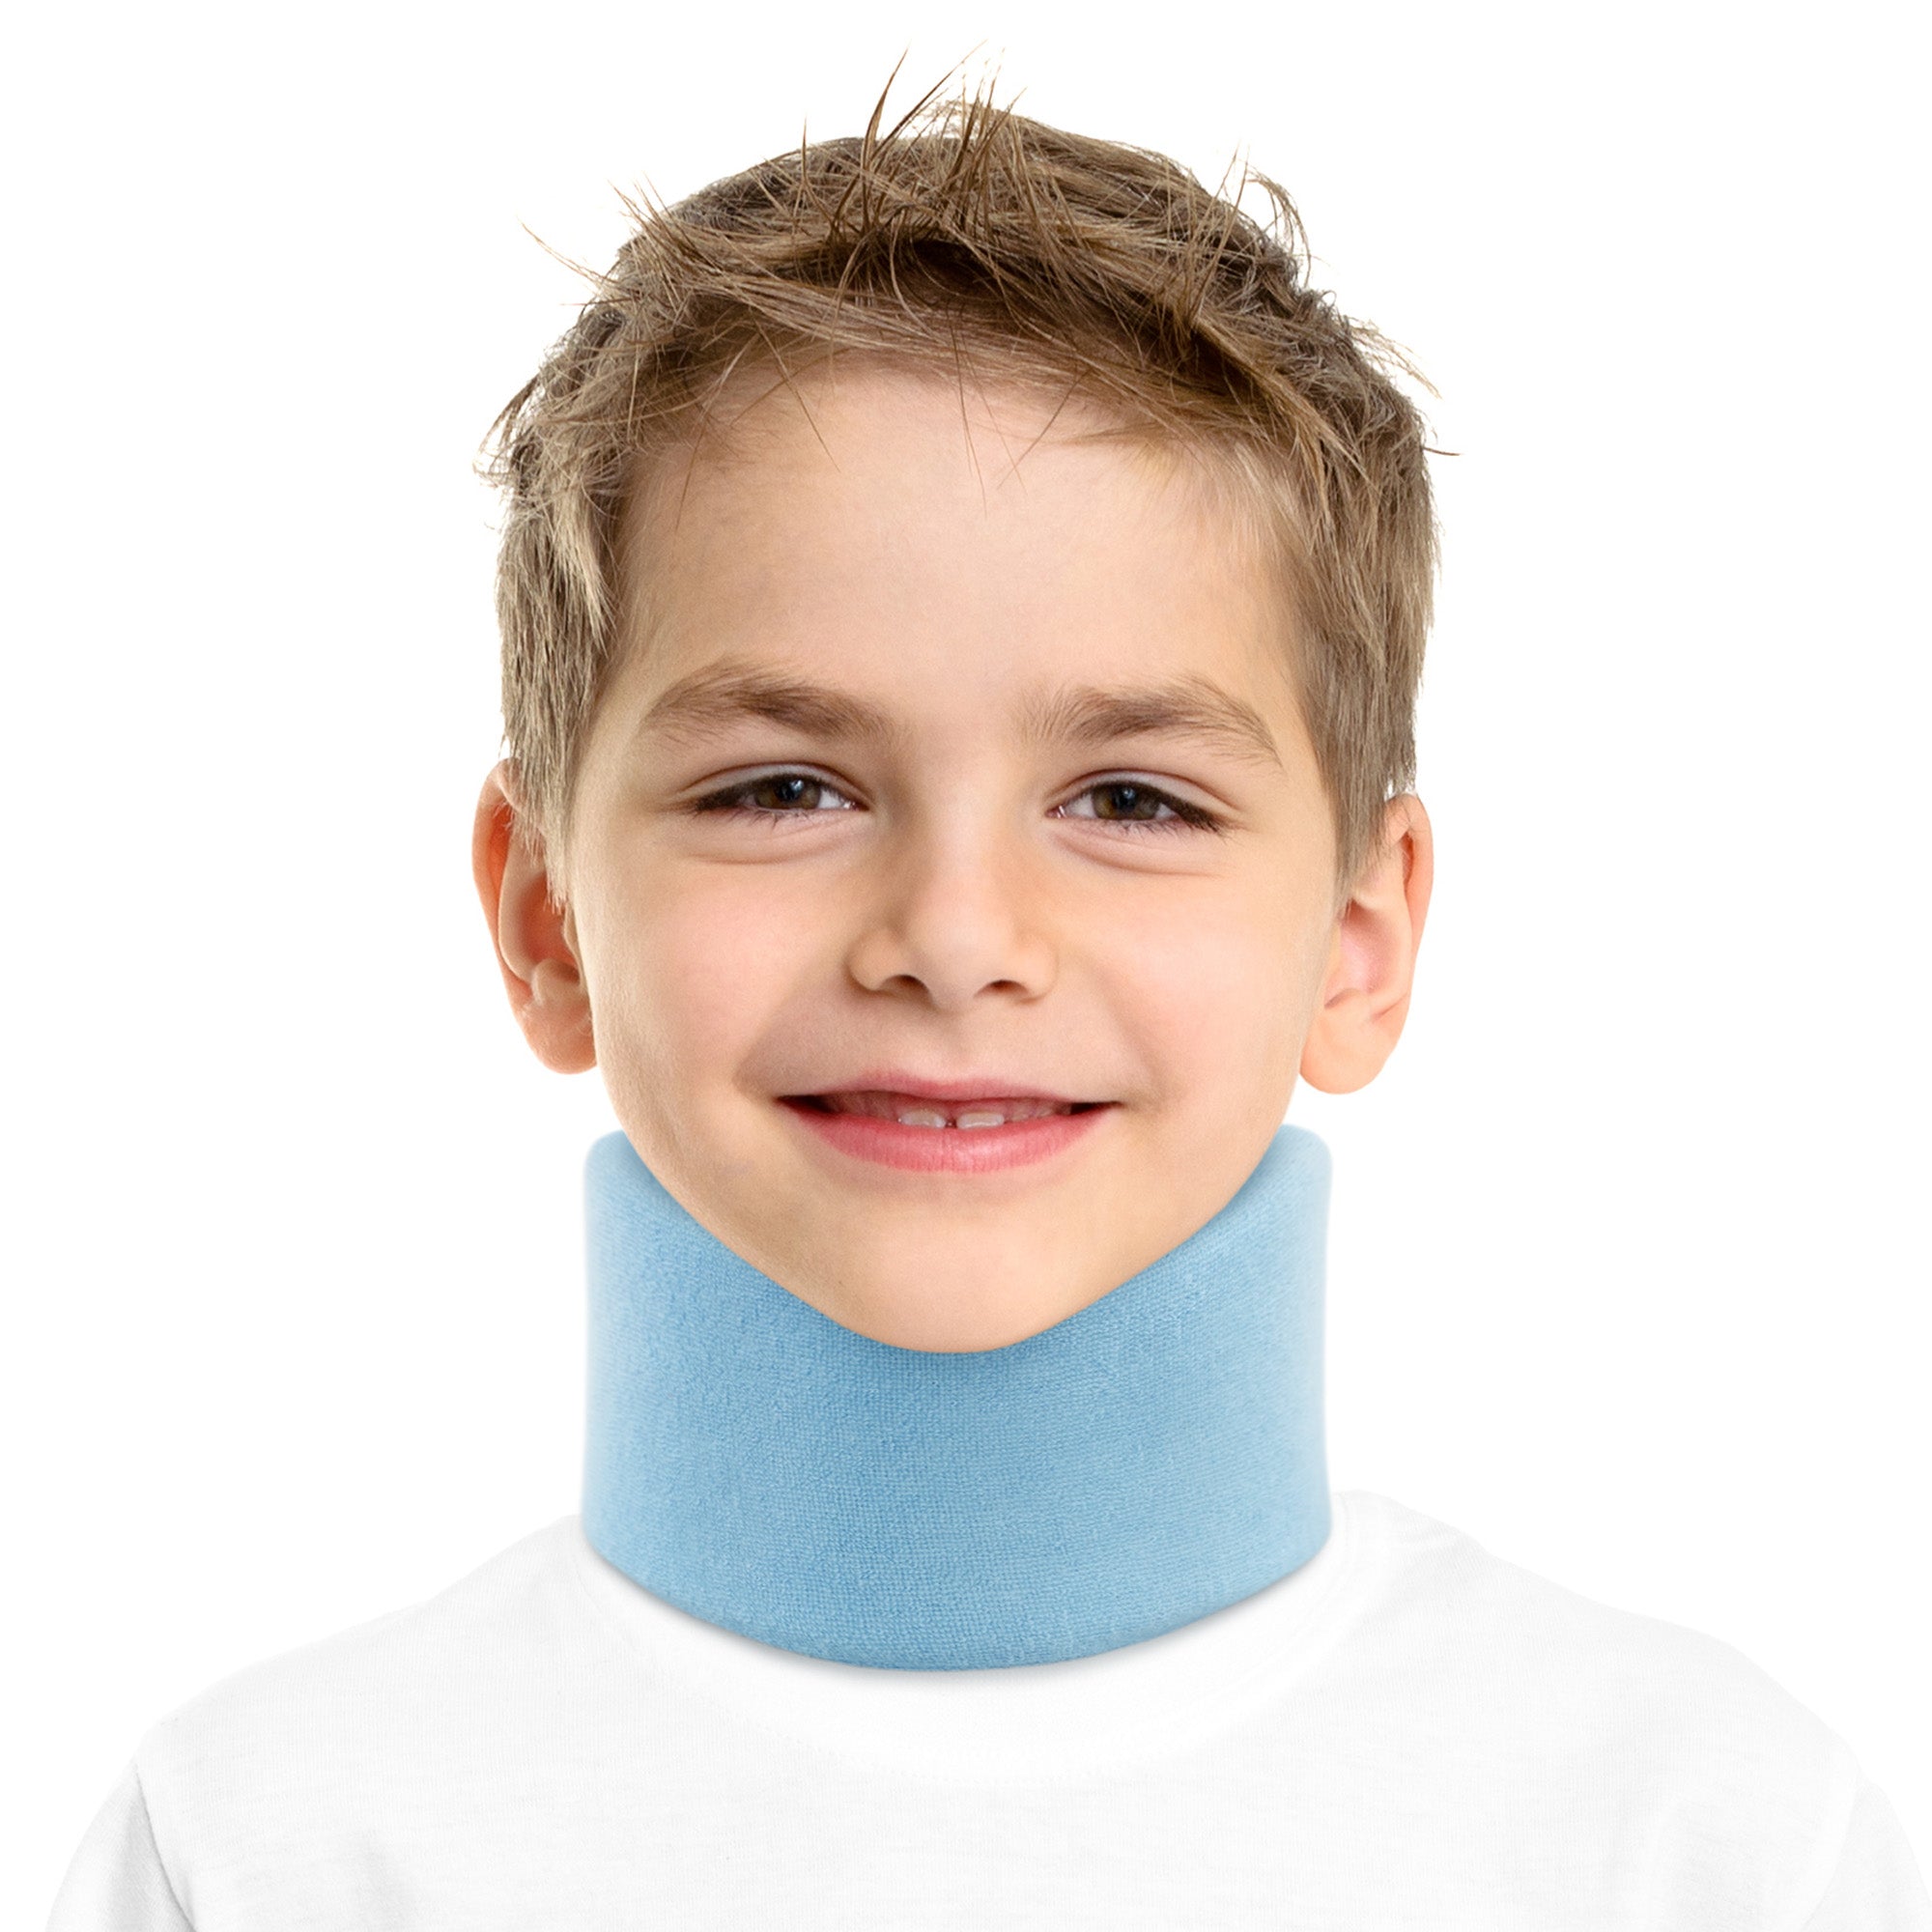 Pediatric Cervical Collar/Kids Neck Support Brace / ACJS03